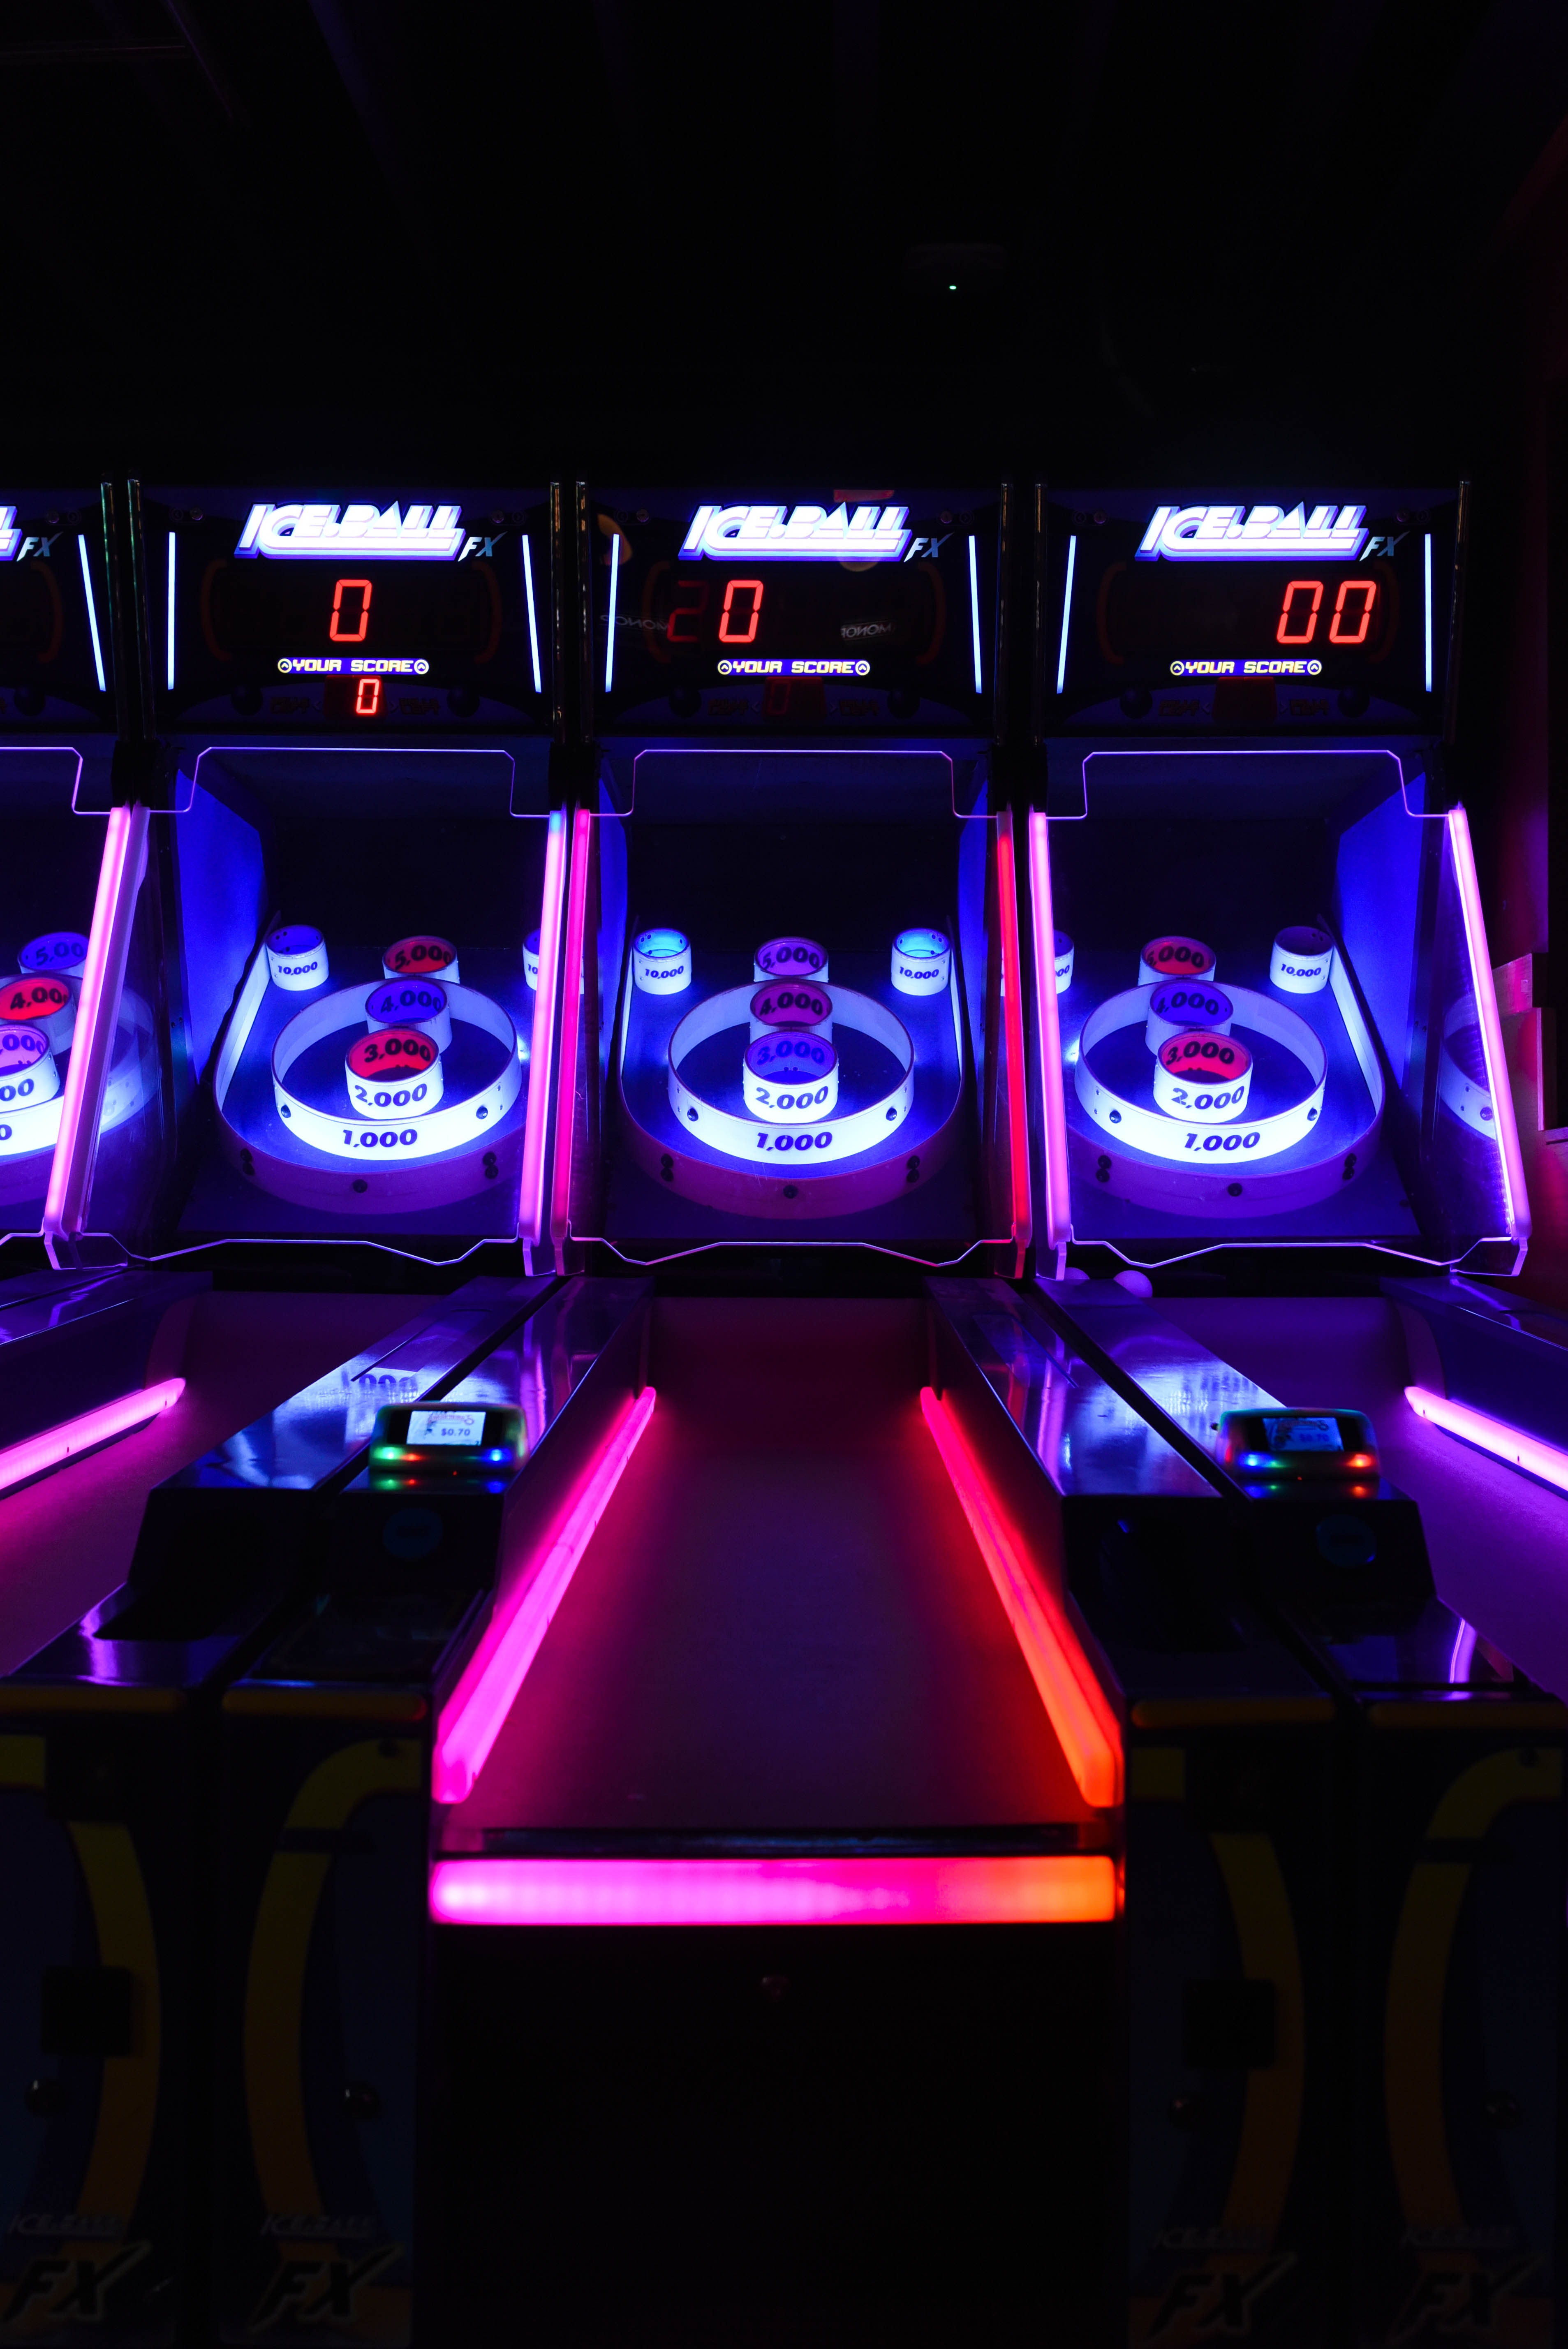 arcade games in neon